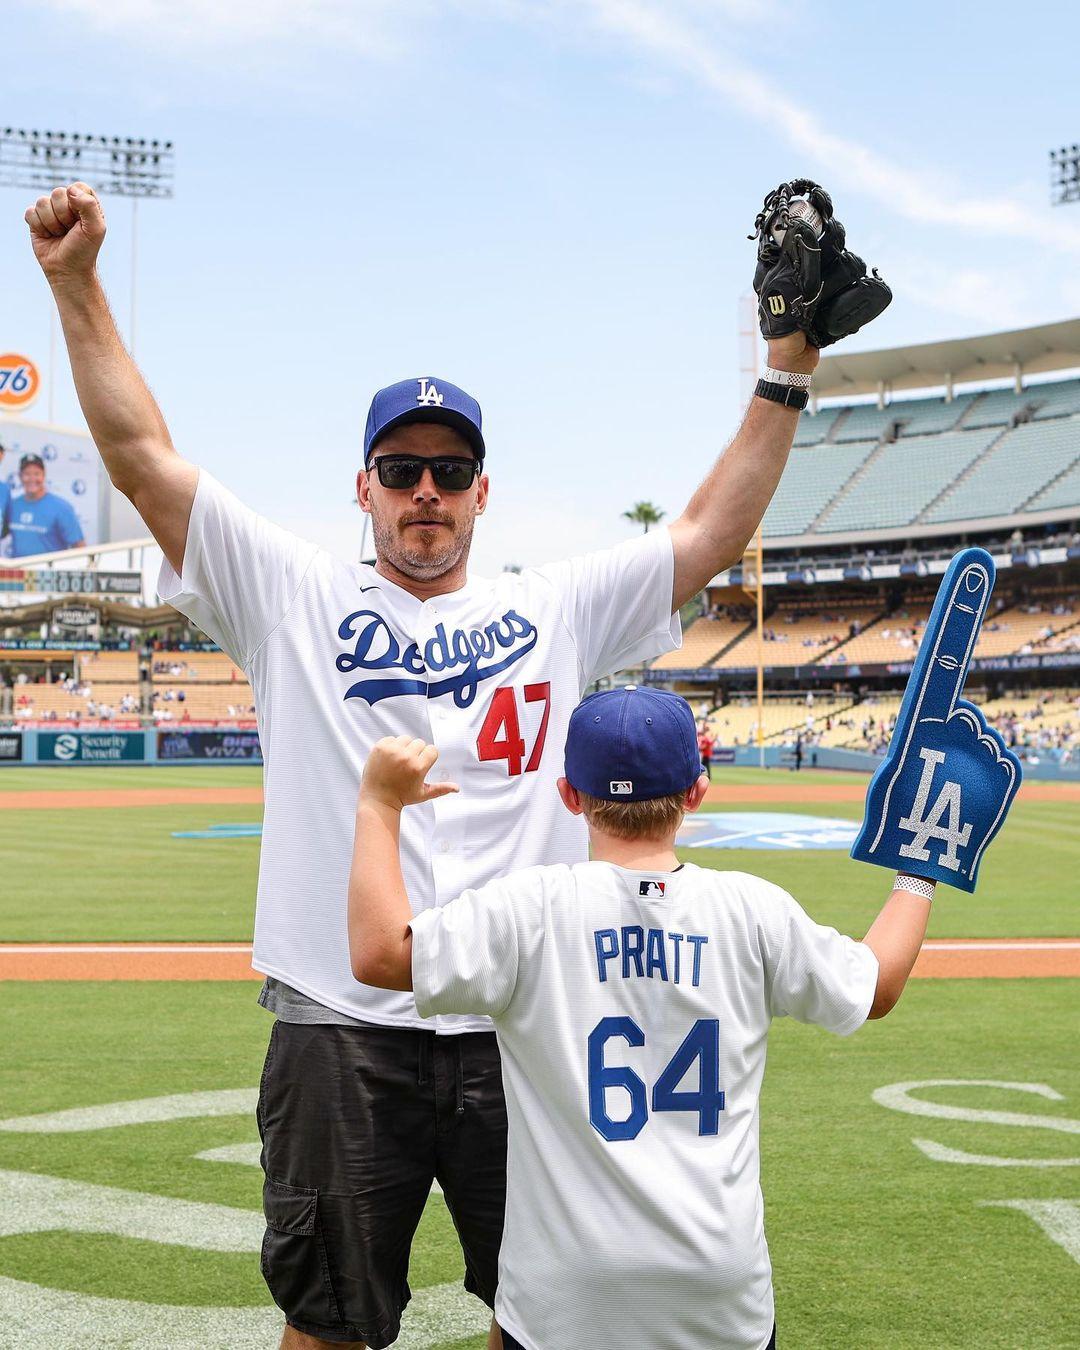 Chris Pratt with son Jack